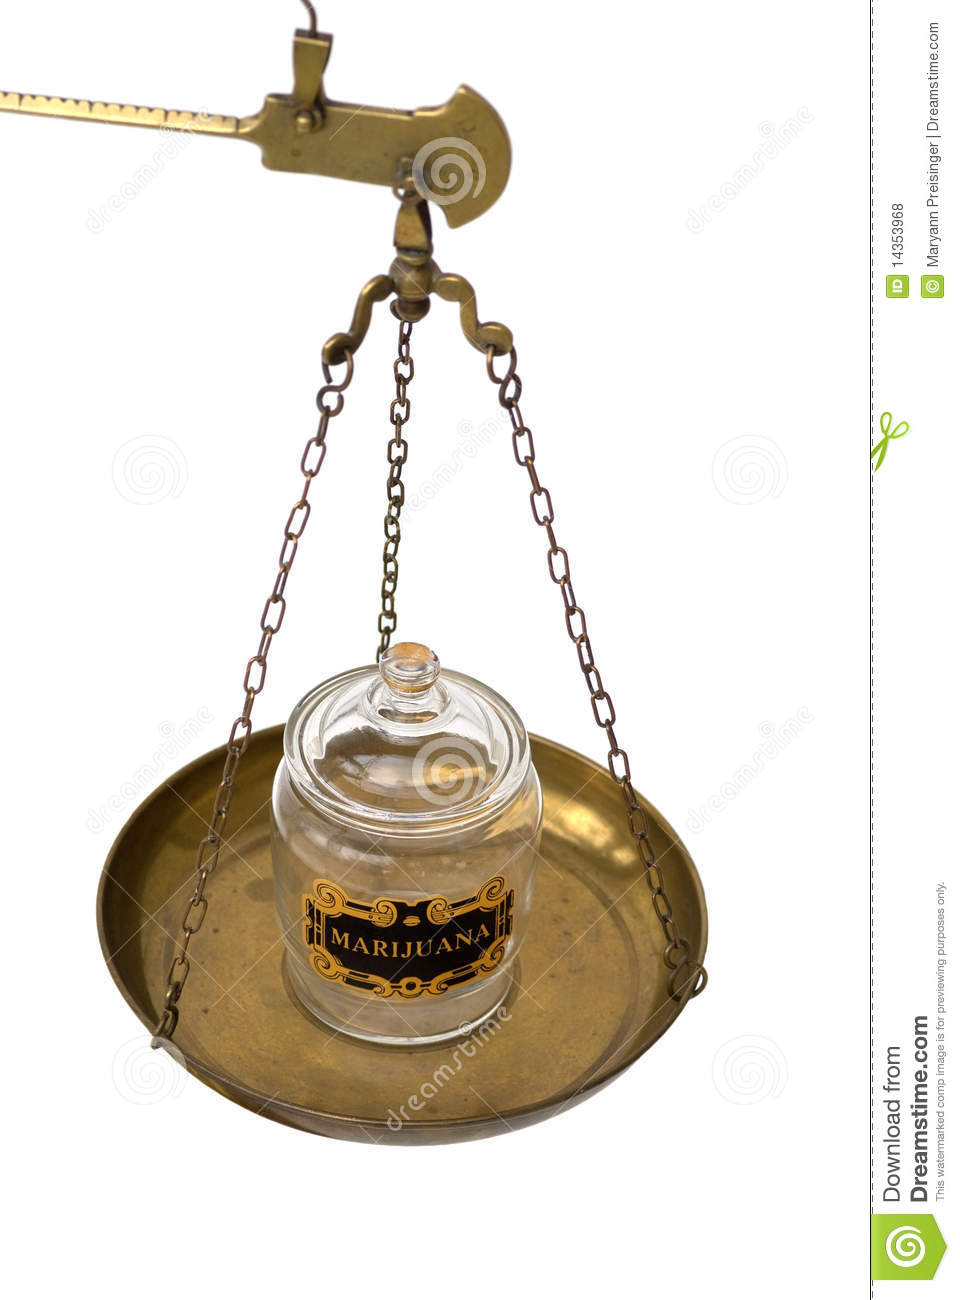 Marijuana Jar On A Brass Scale Weighing Pan Royalty Free Stock Photos